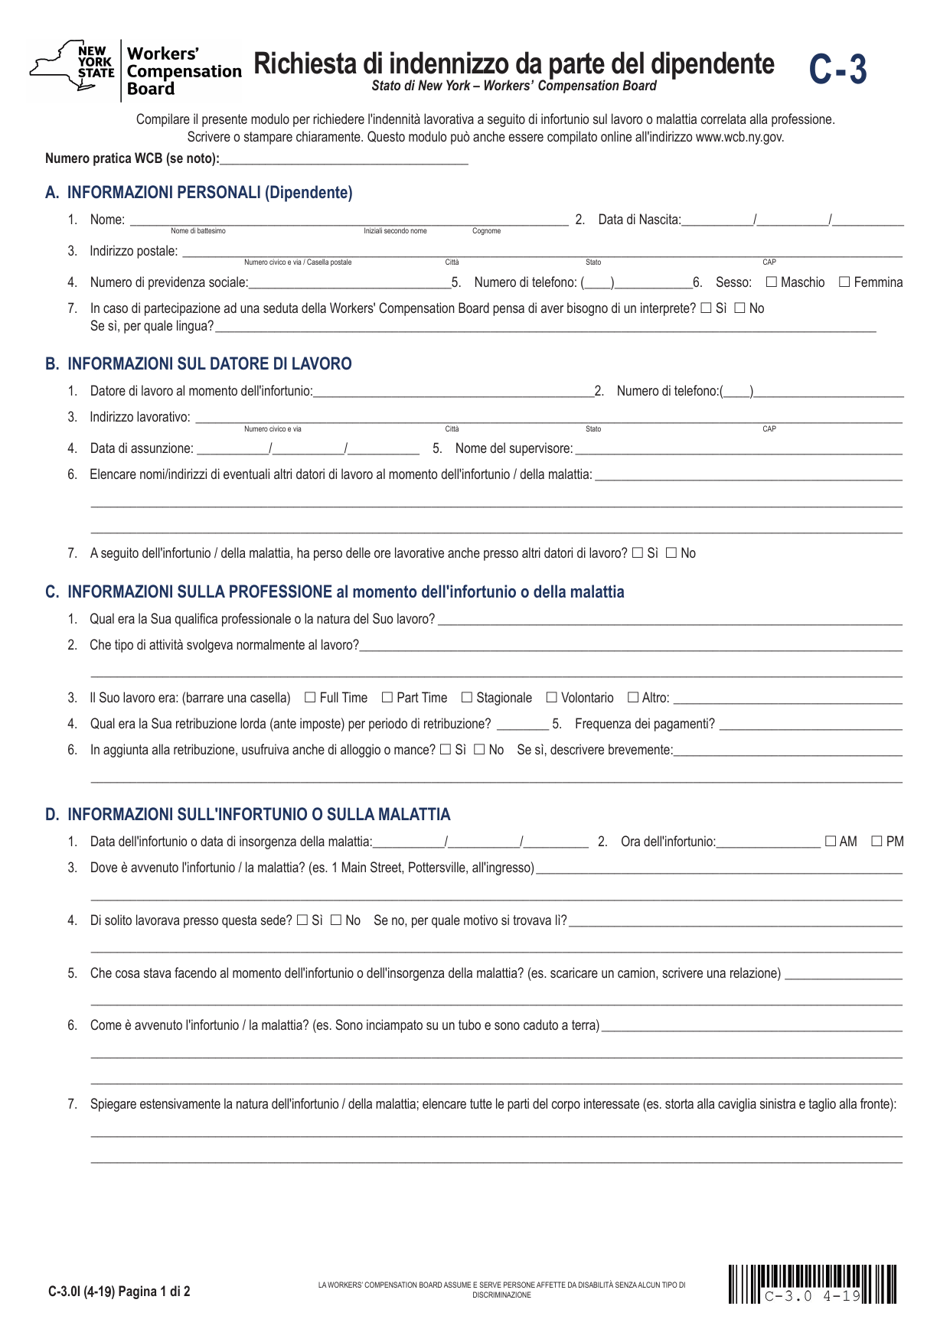 Form C-3I Employee Claim - New York (Italian), Page 1